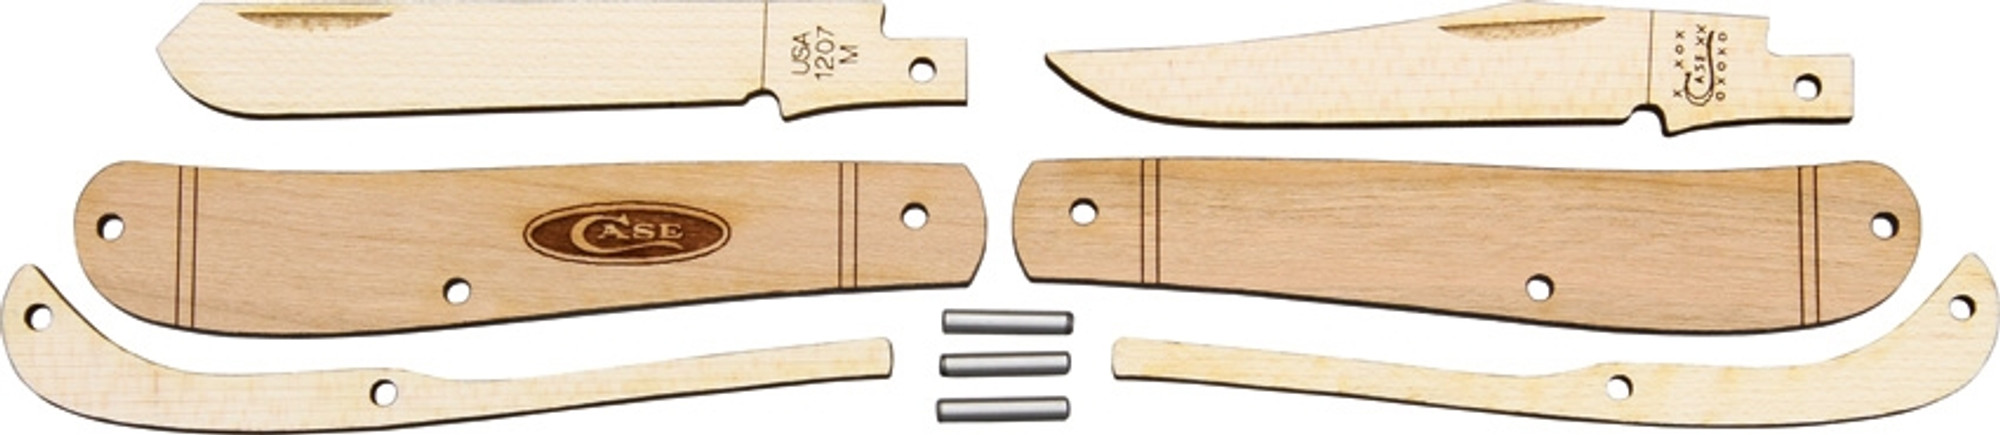 Wooden Knife Kit Mini Trapper